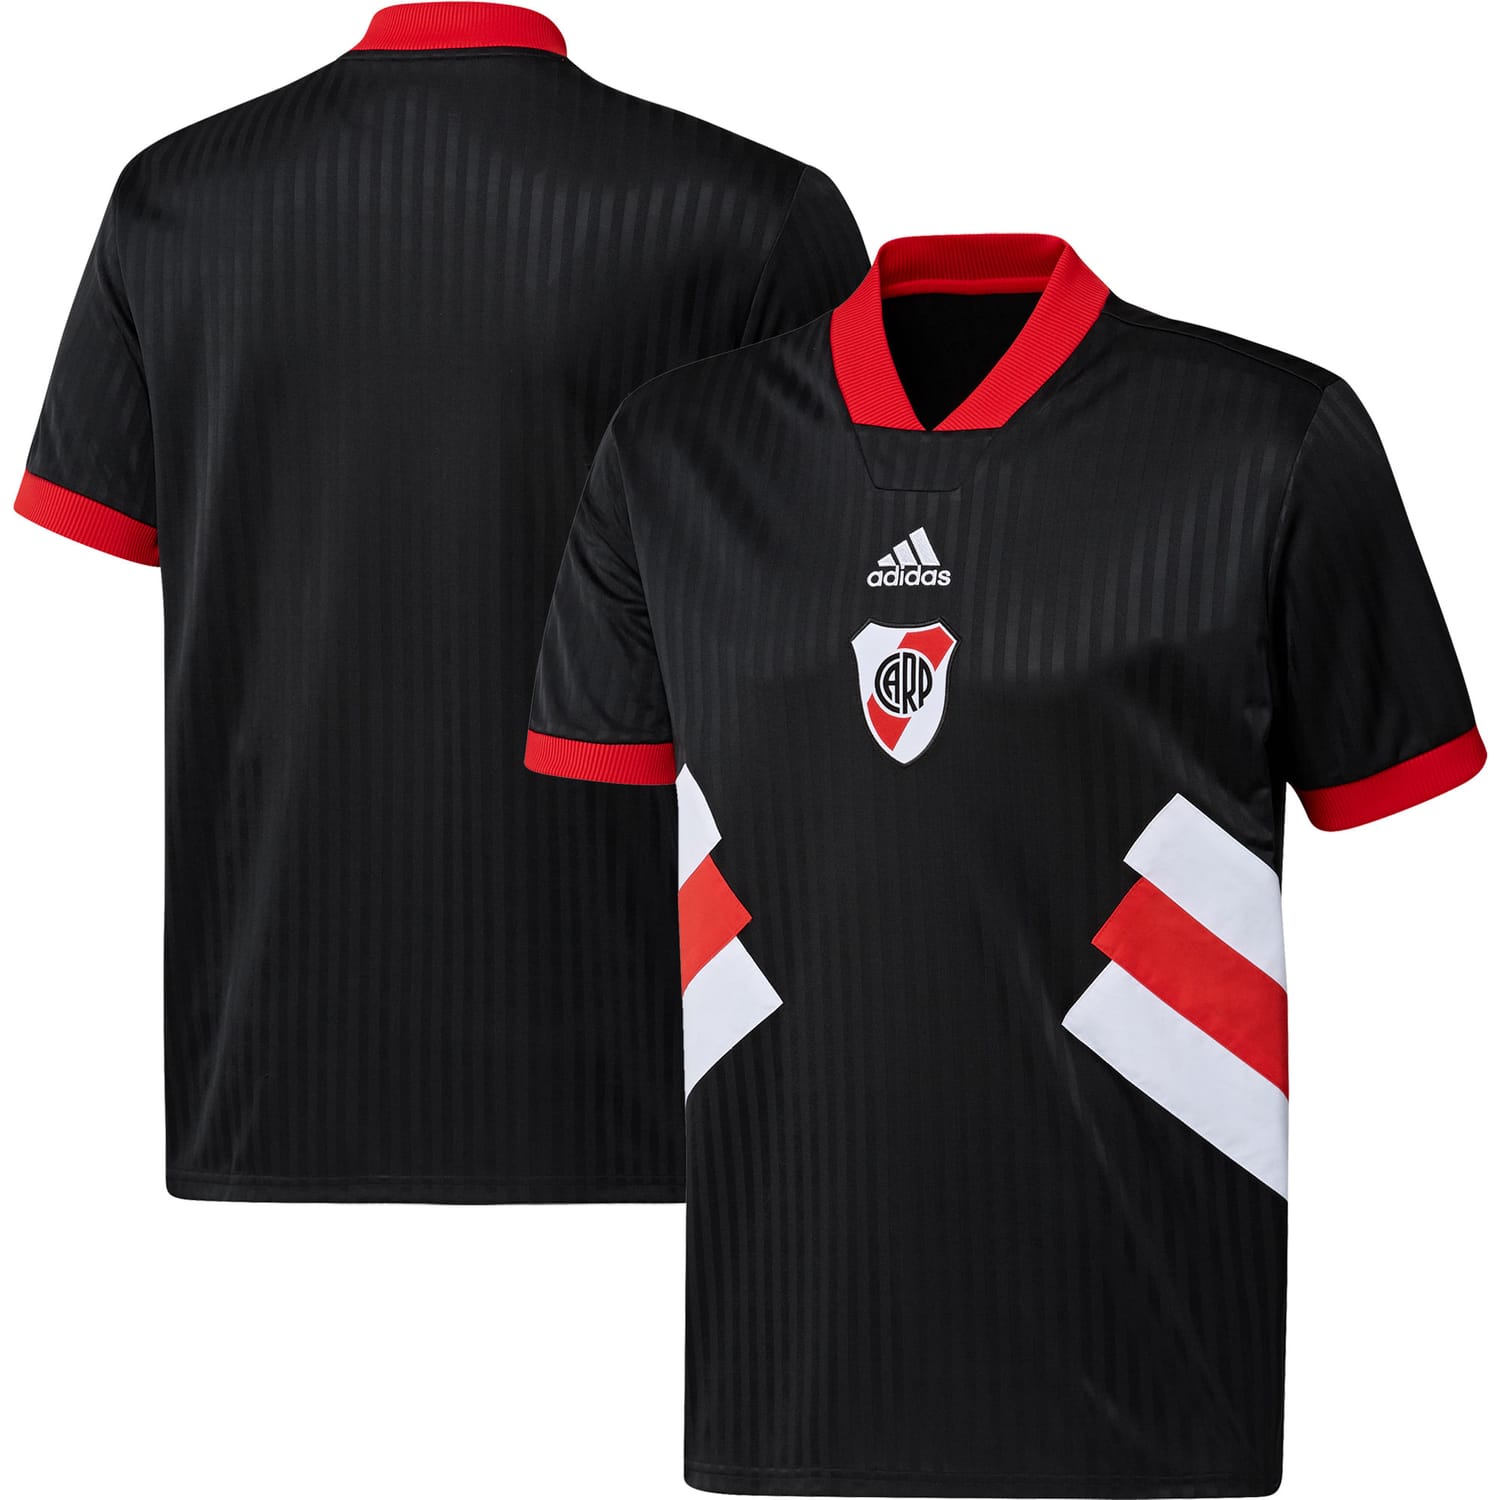 Primera Division Argentina Club Atlético River Plate Jersey Shirt Black for Men